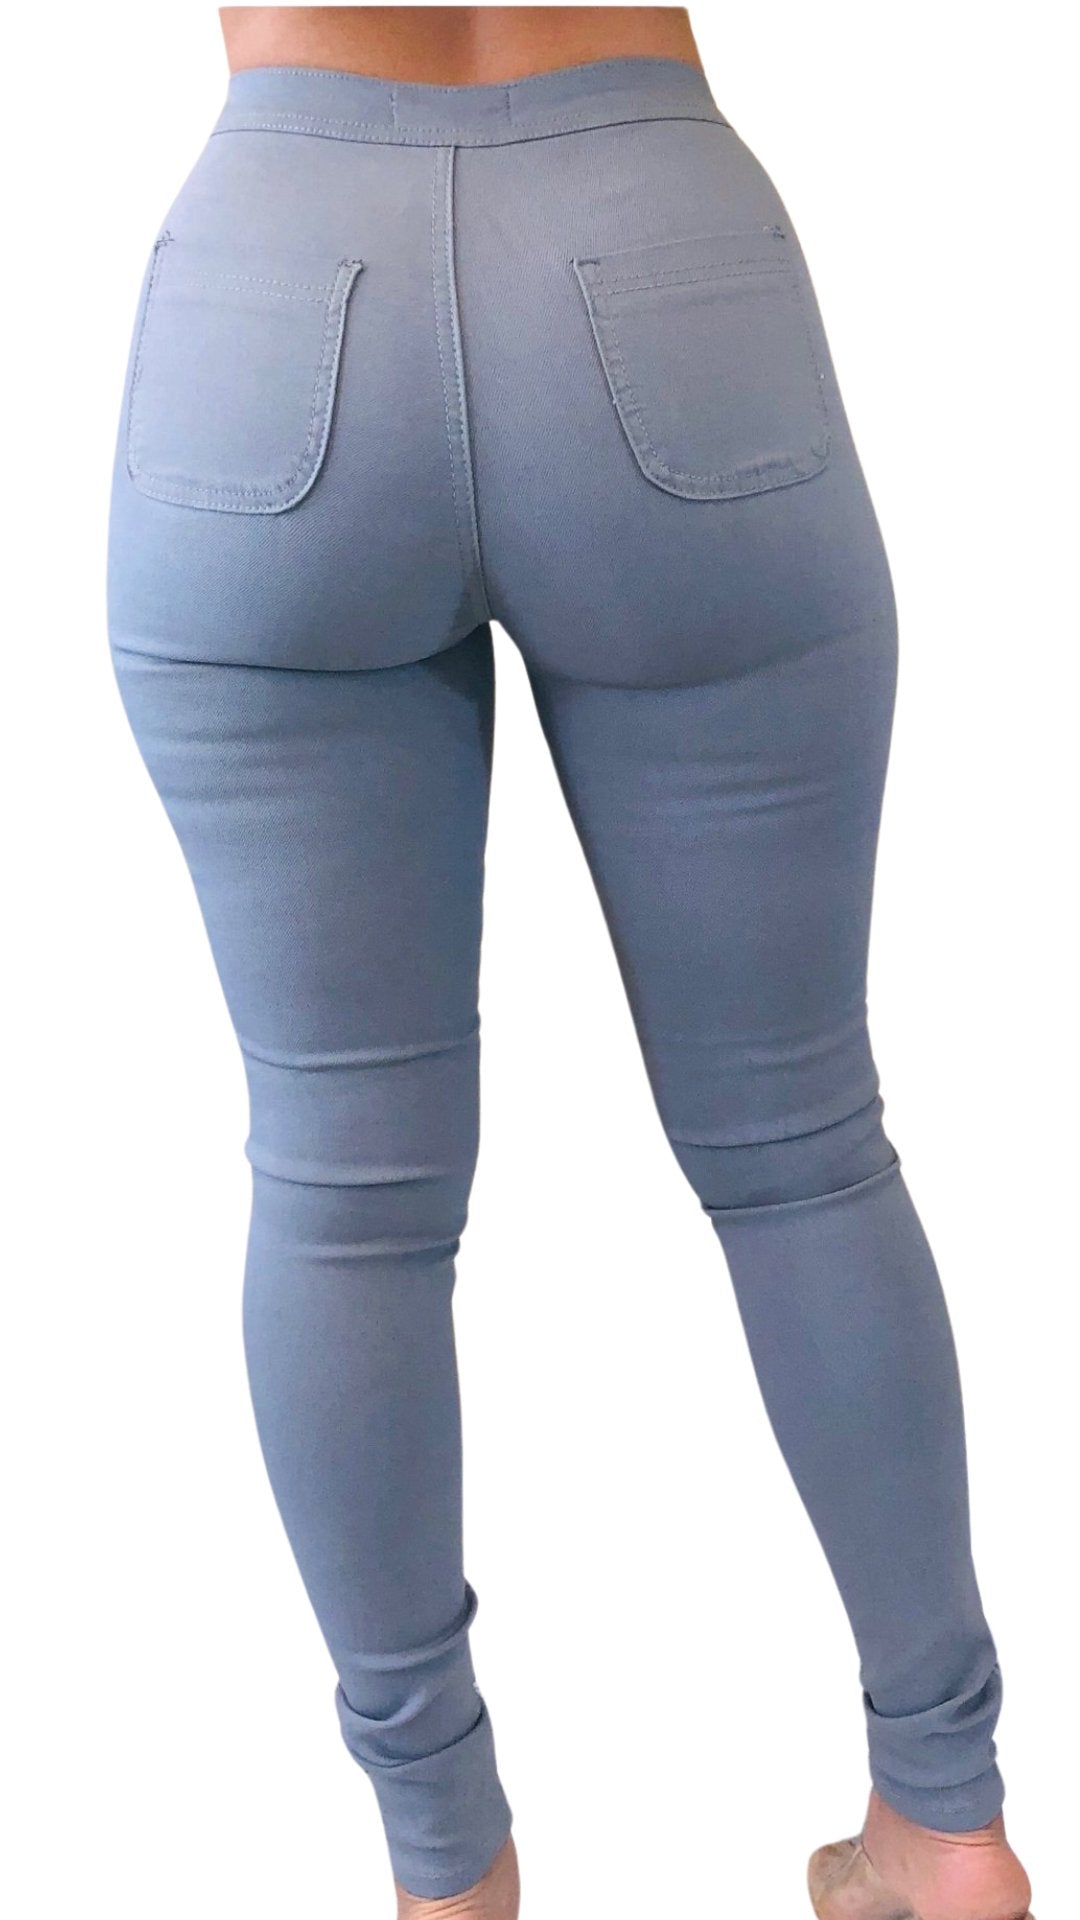 Buy Women's Sky Blue Denim Slim Fit Stretchable Jeggings (34) at